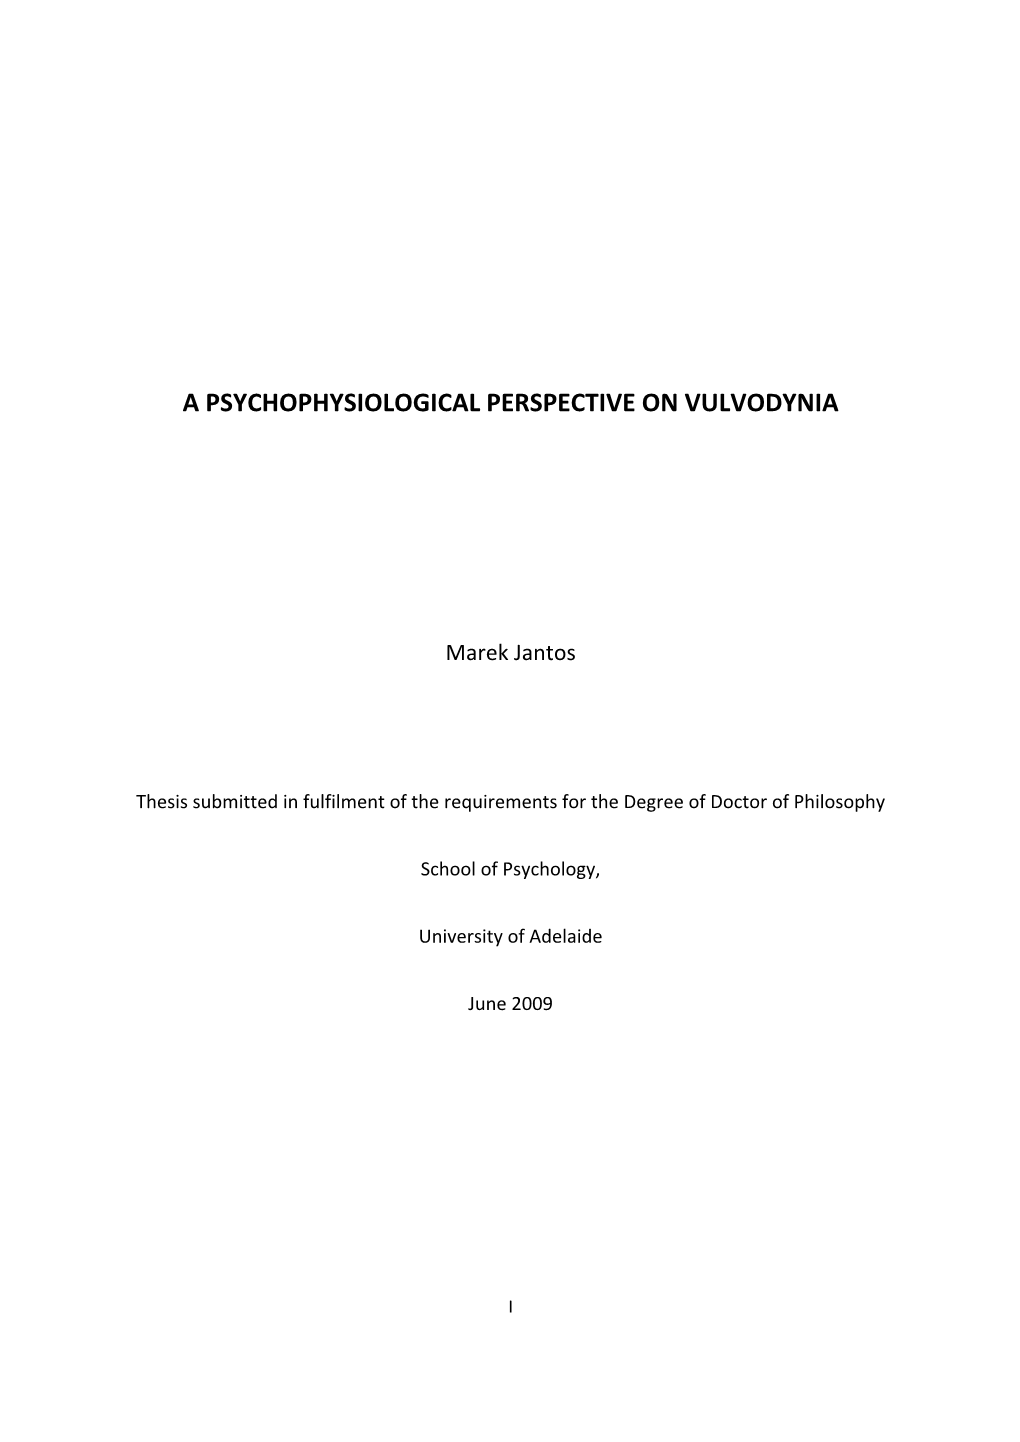 A Psychophysiological Perspective on Vulvodynia